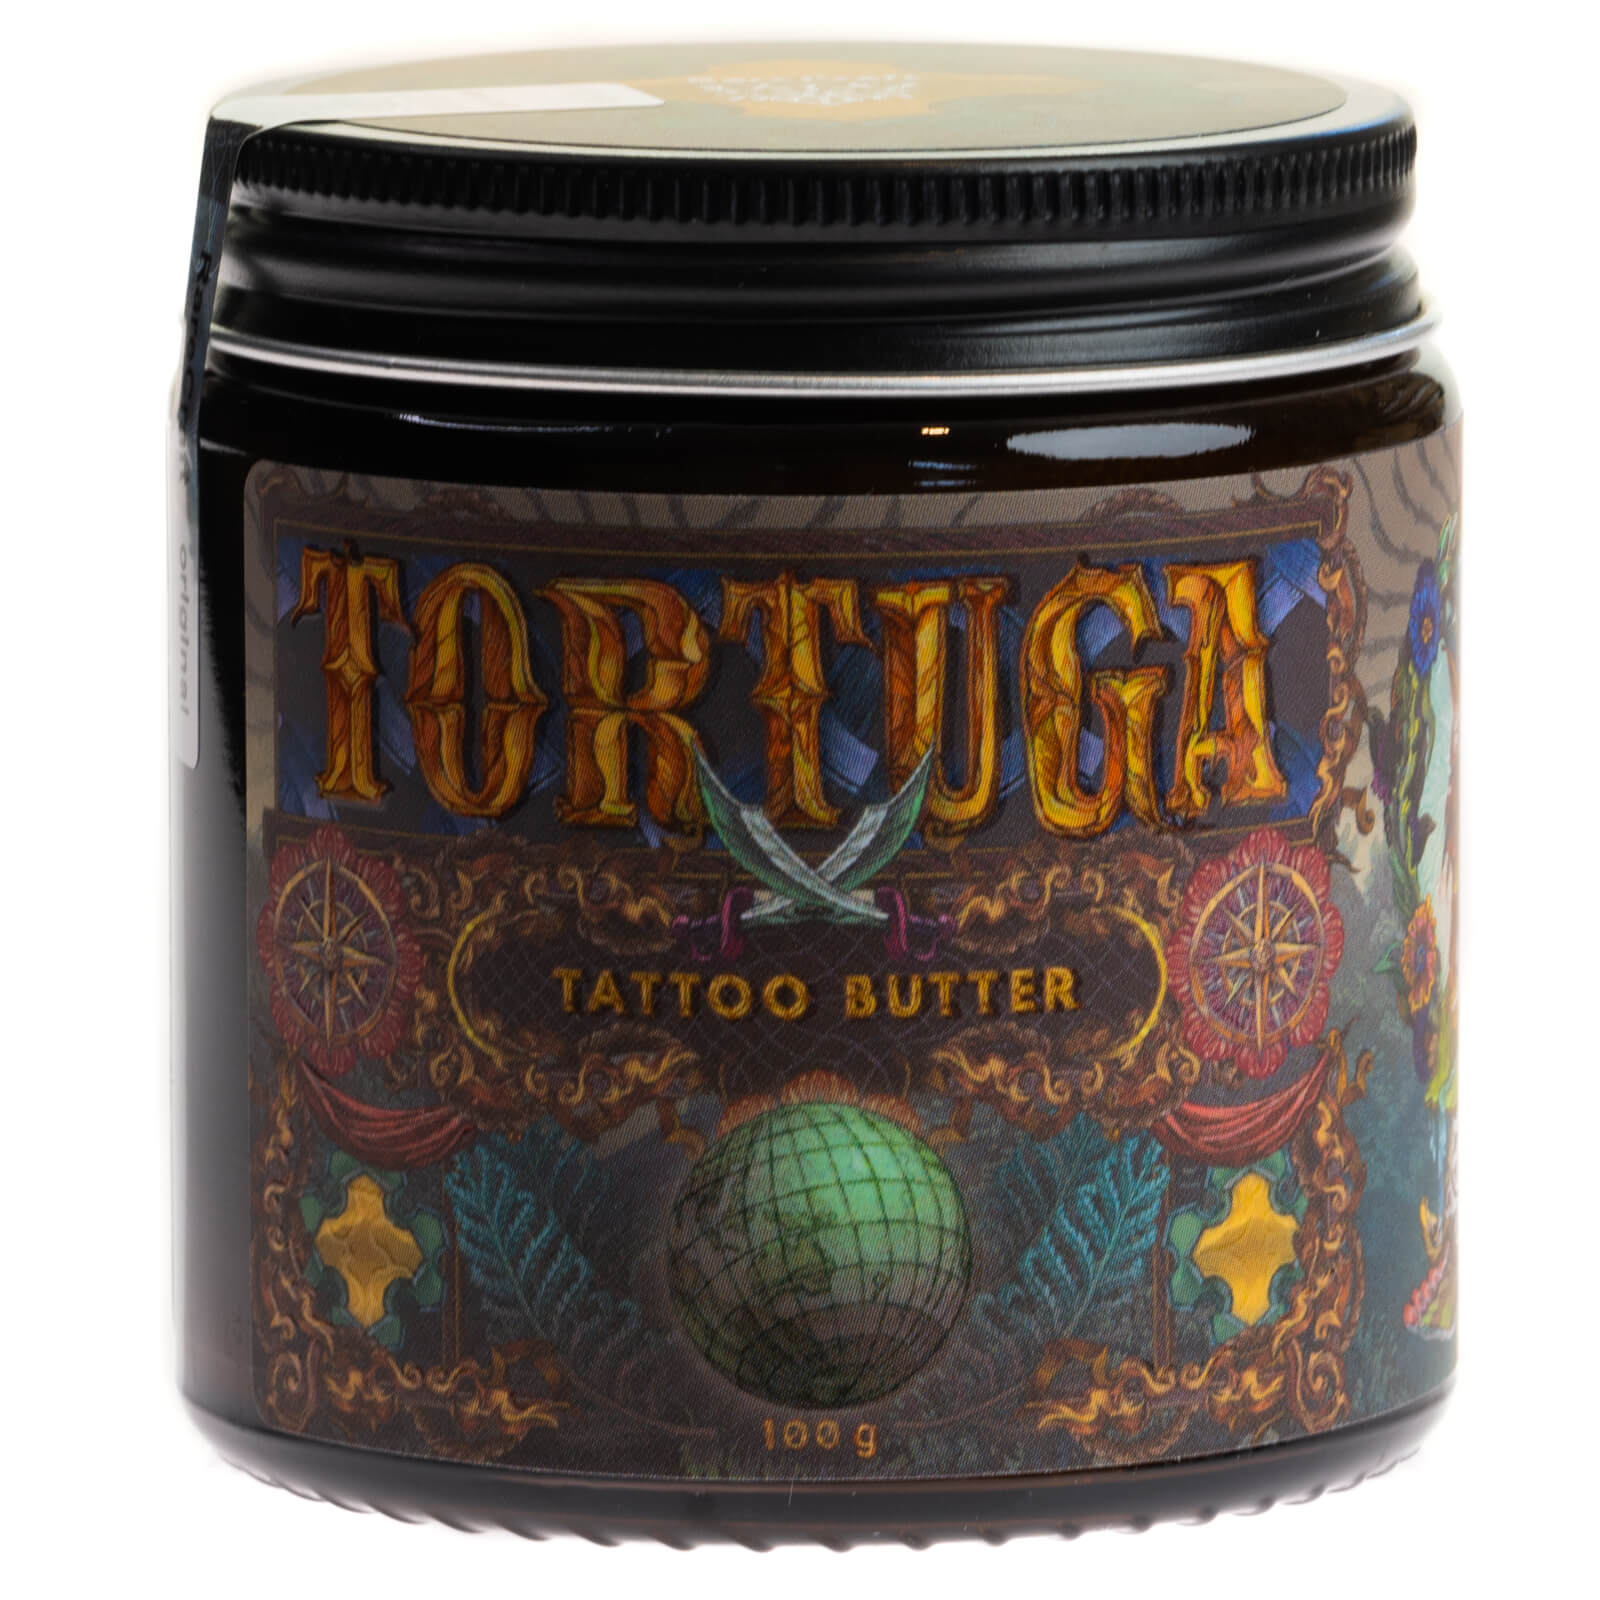 RareCraft Tortuga, Tattoo Butter